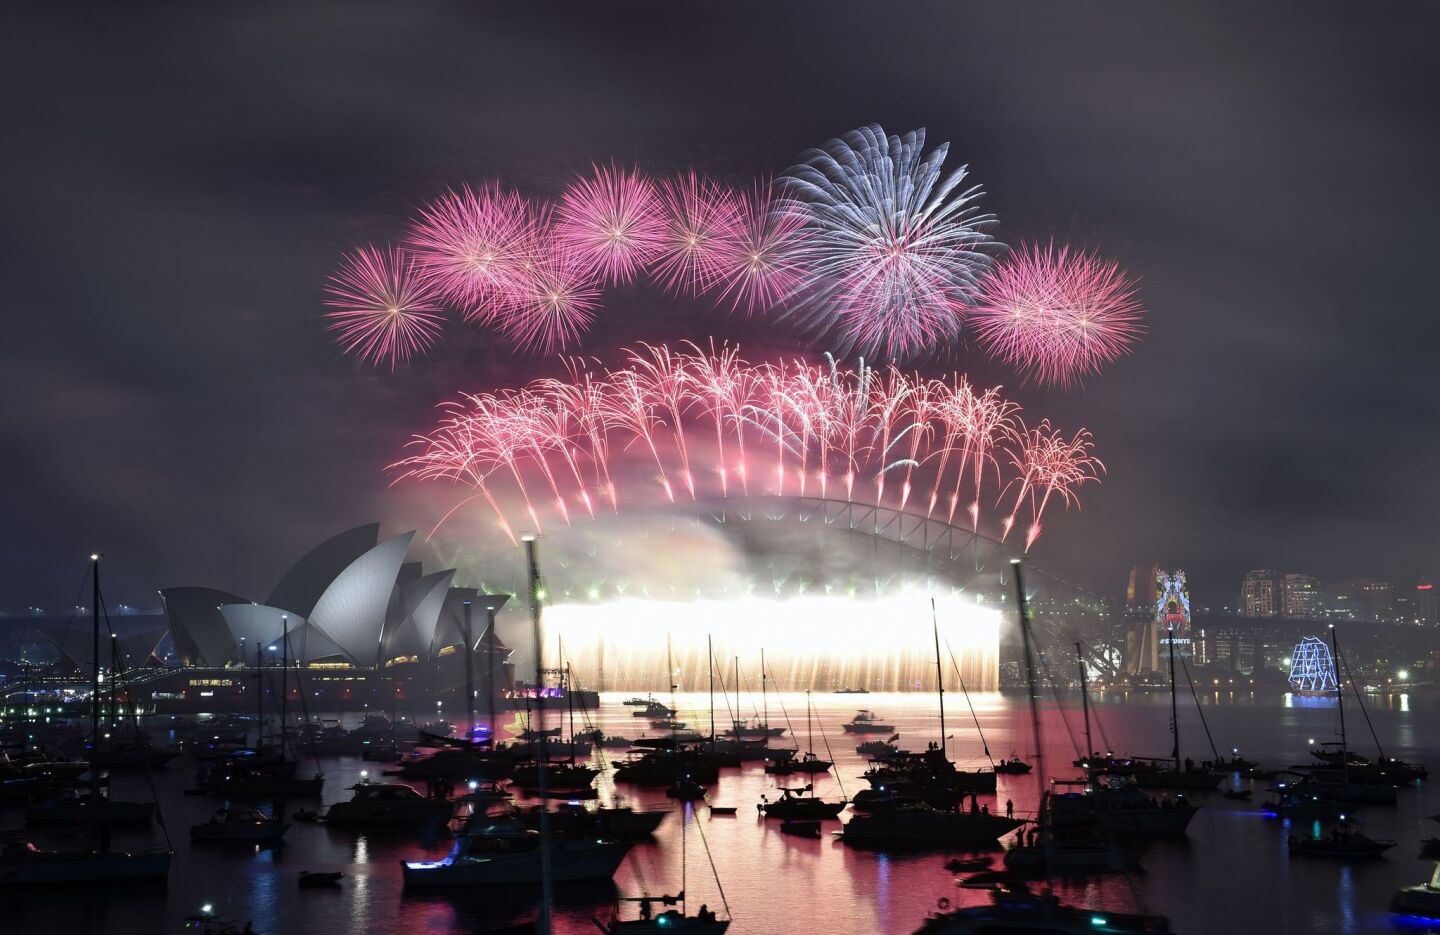 New Year's fireworks light up the sky over Sydney, Australia's Opera House, left, and Harbour Bridge.